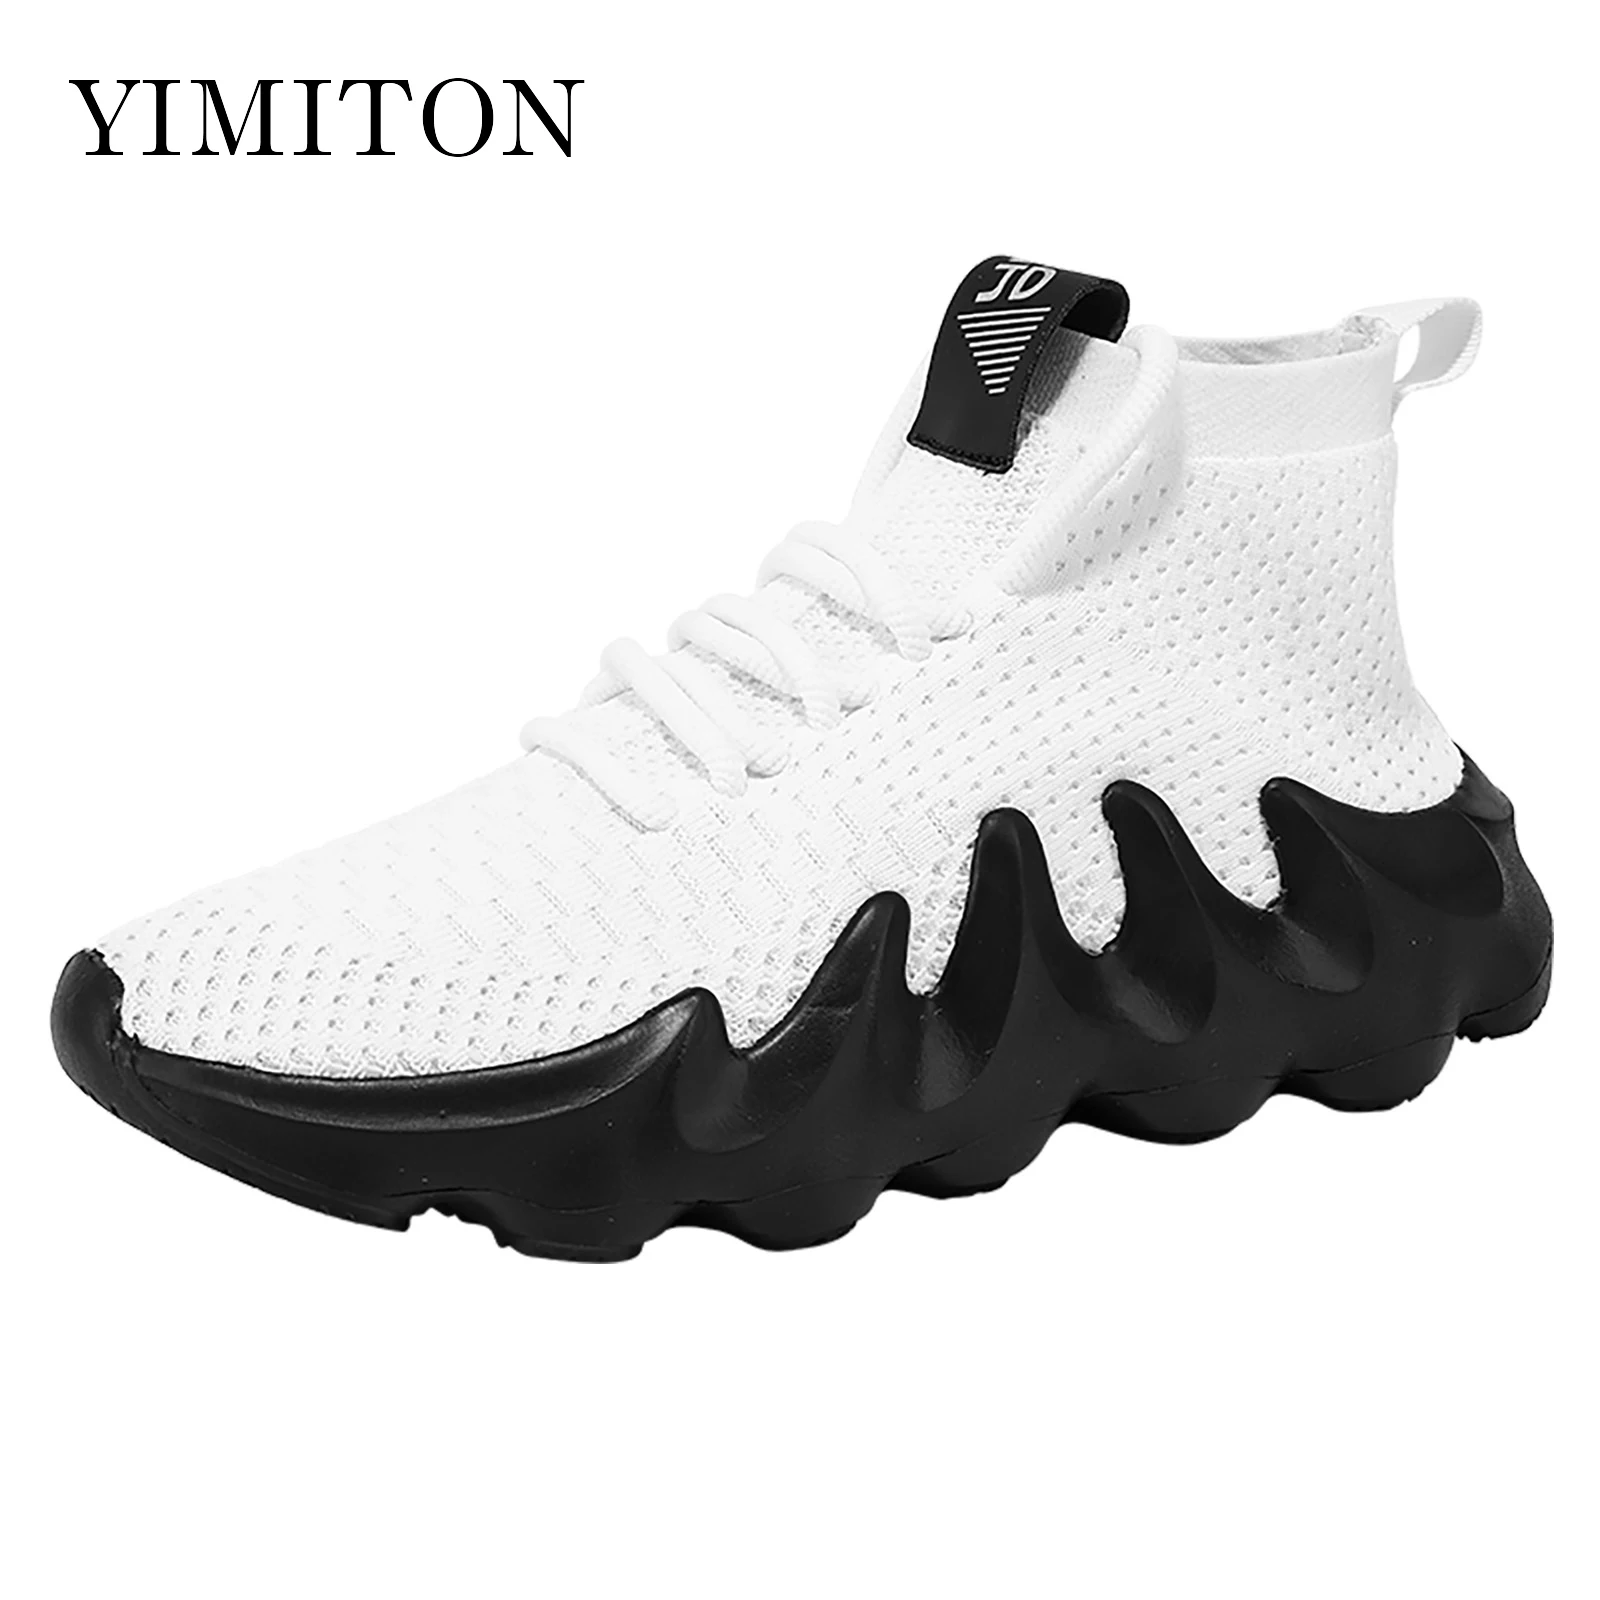 Yimiton Men's Trail Running Big Size Lightweight Trekking Sneakers Outdoor Walking Jogging Tennis Shoes 39-46